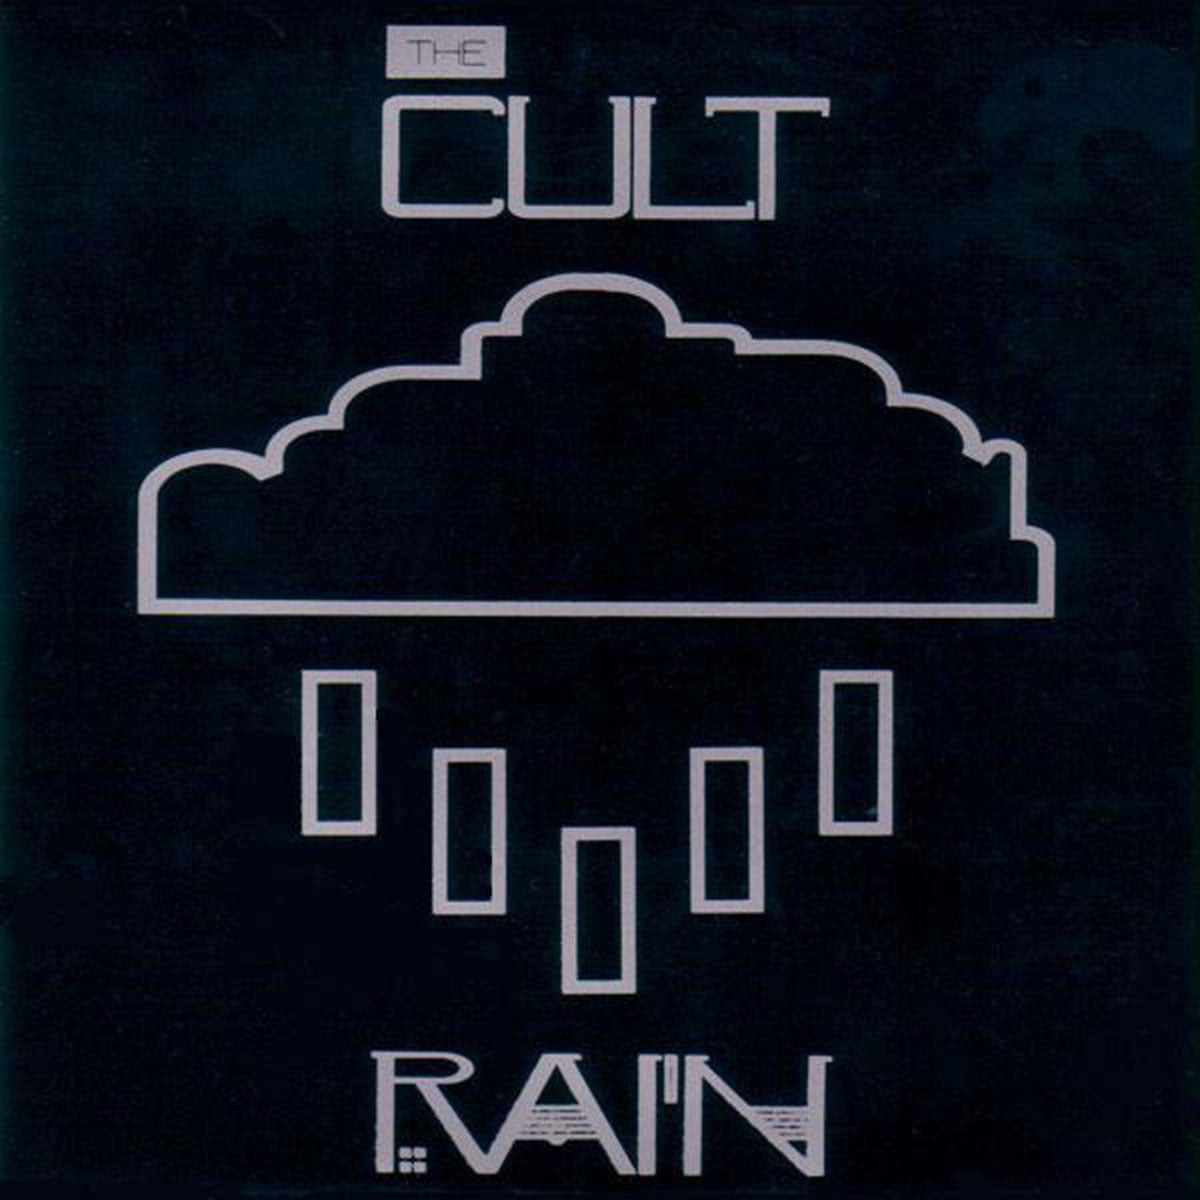 The Cult – Rain - 1985